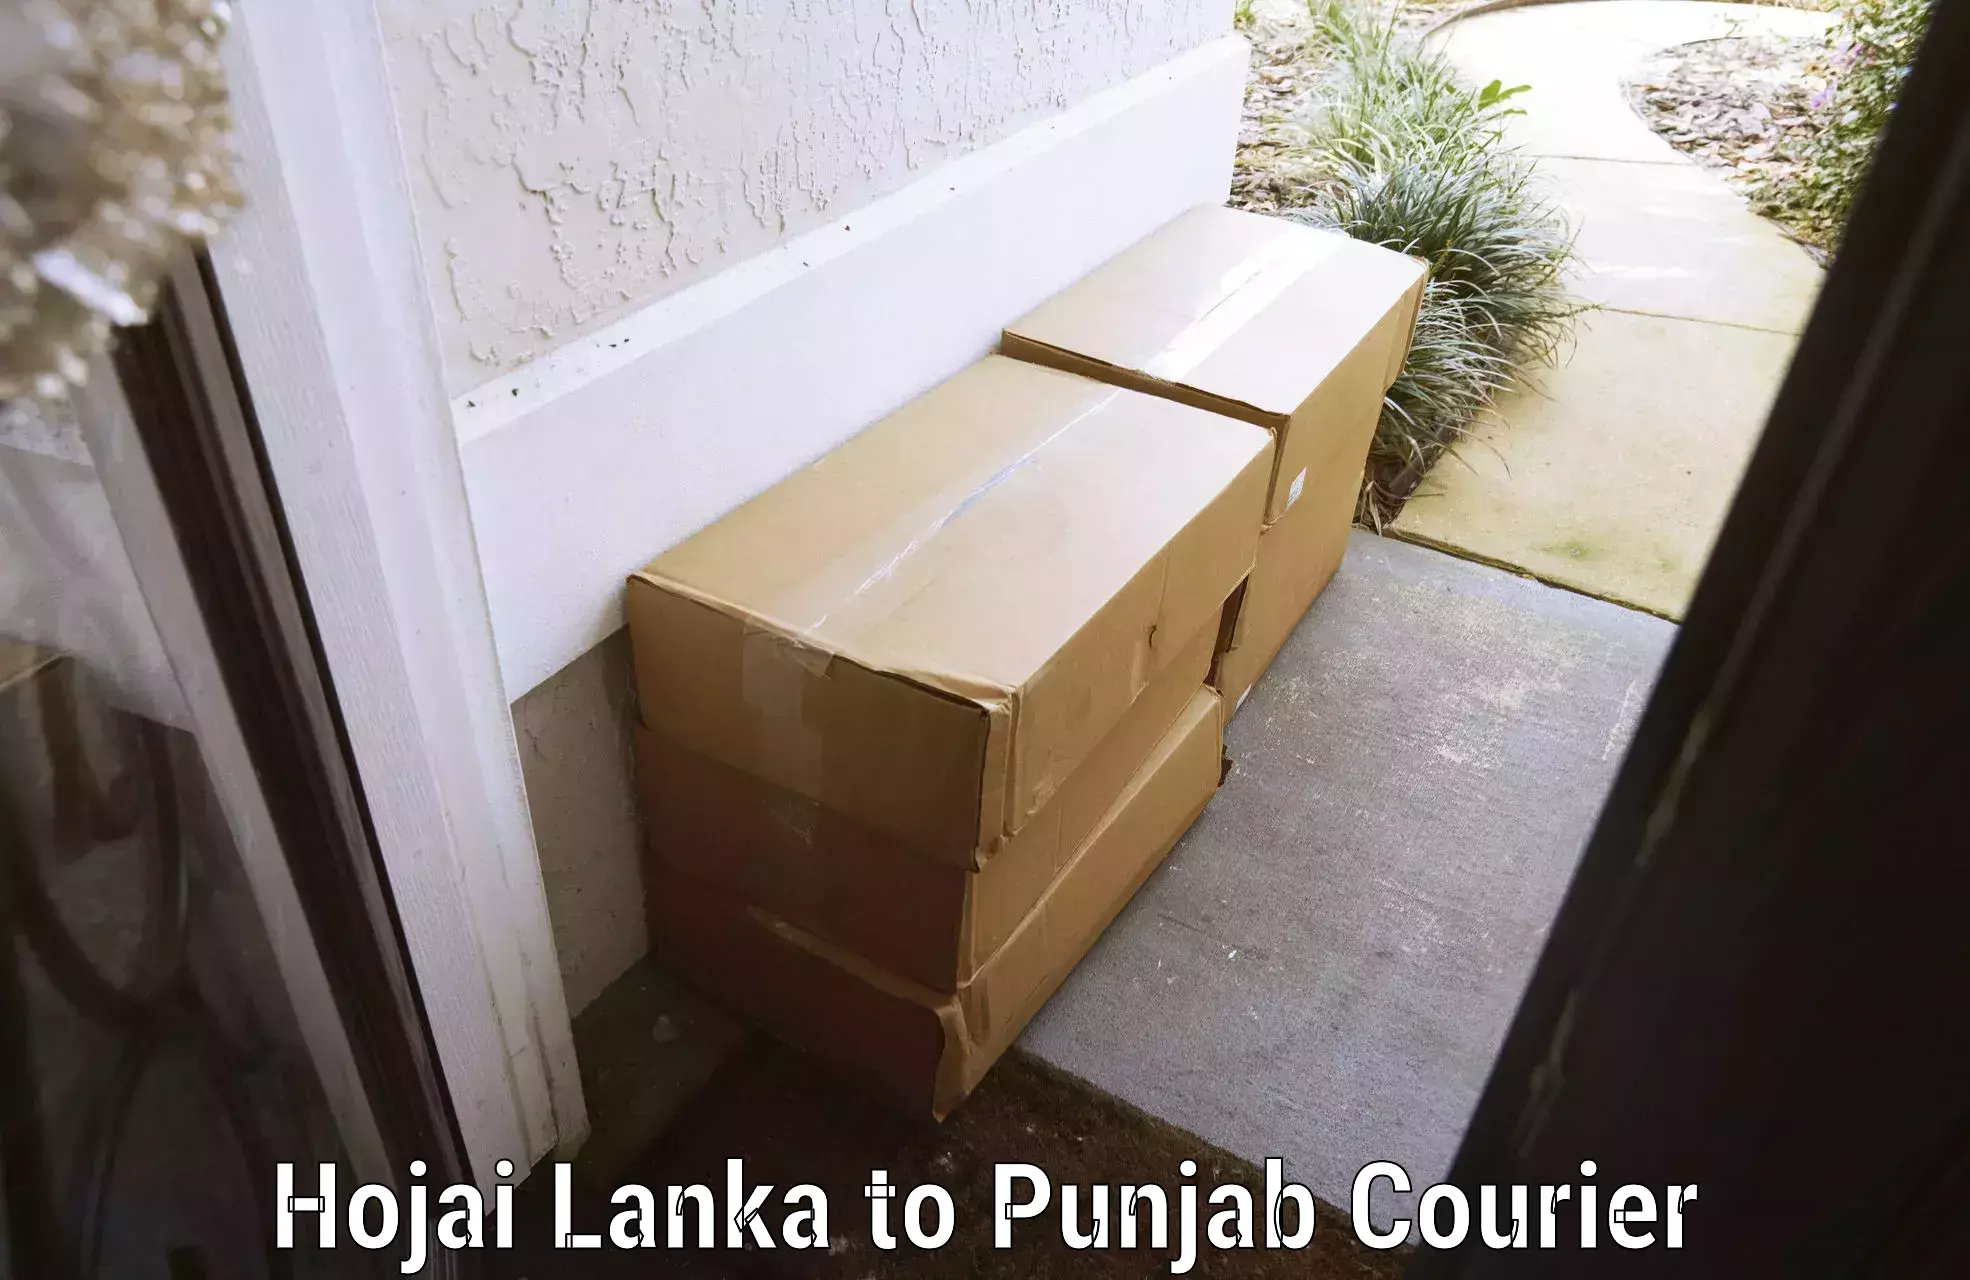 Luggage shipment processing Hojai Lanka to Punjab